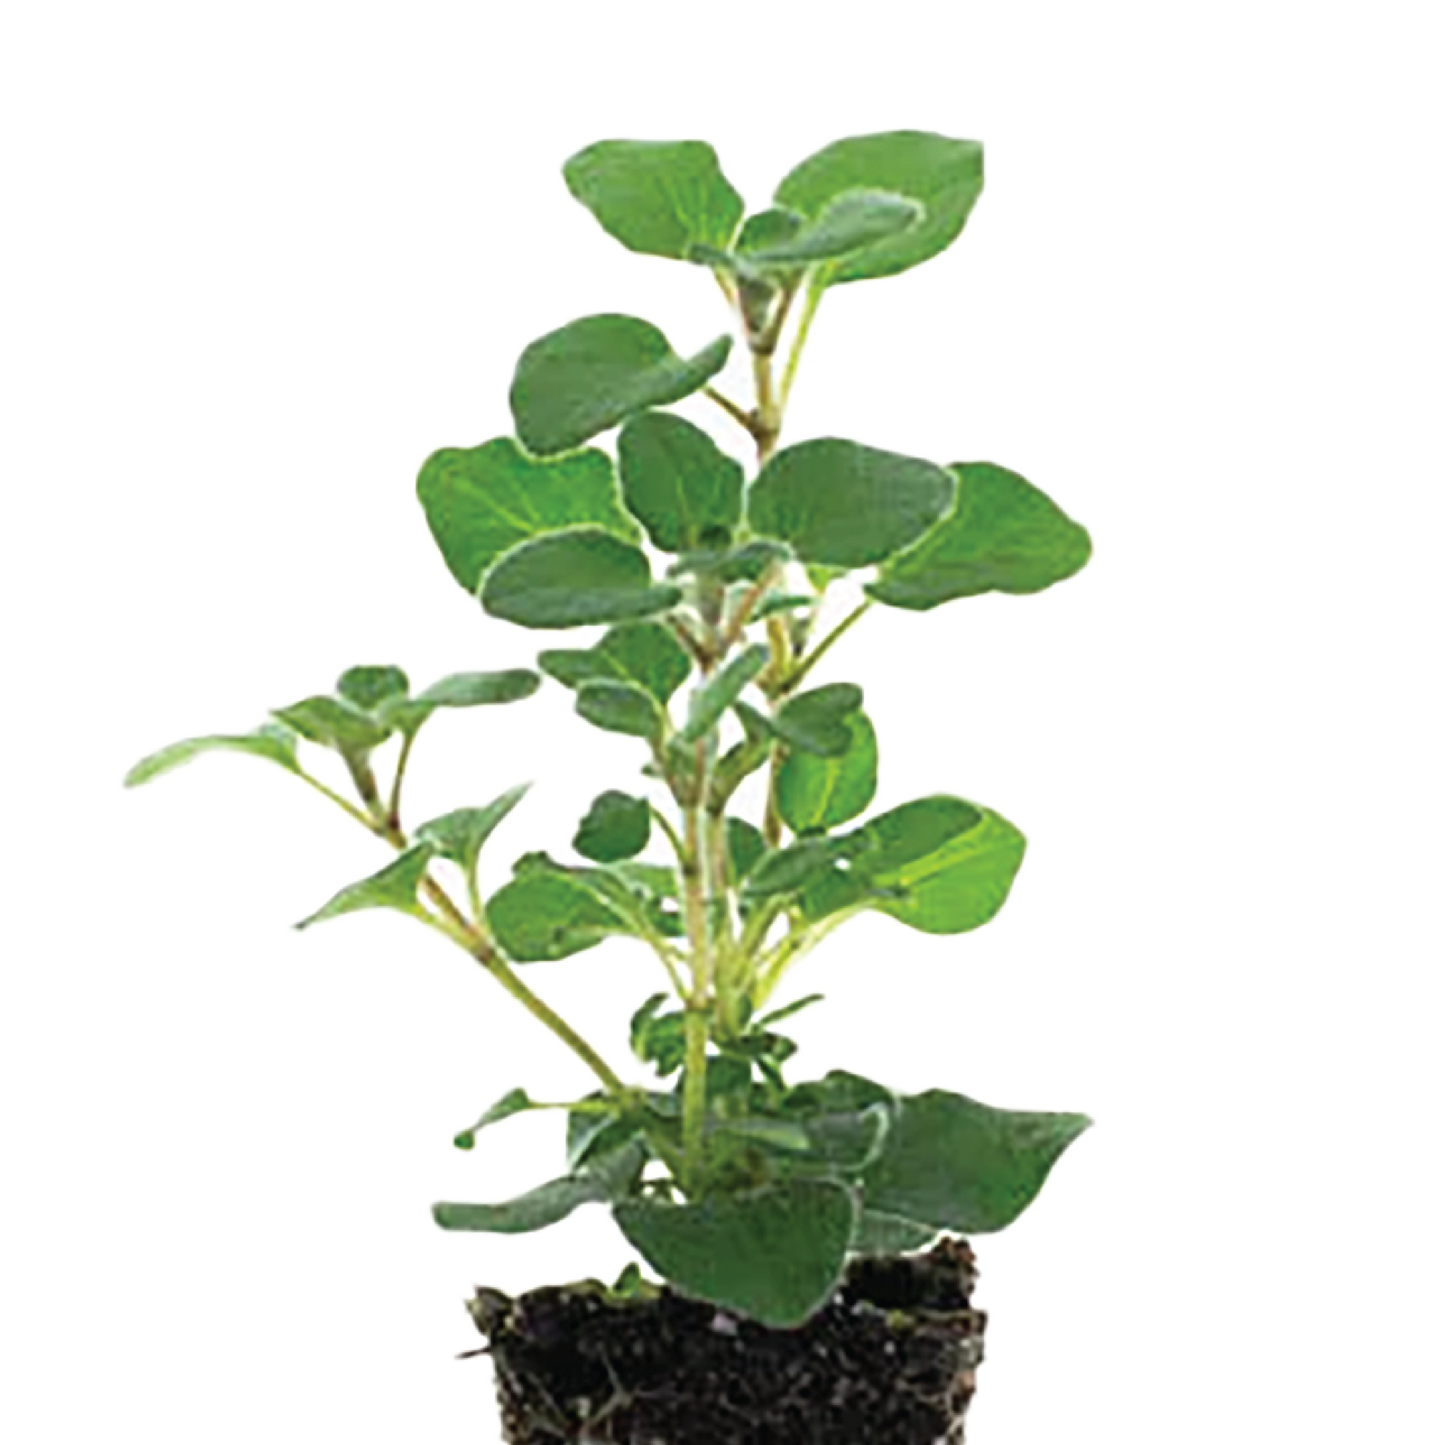 Oregano Italian Plantlings Live Baby Plants 1-3in., 3-Pack